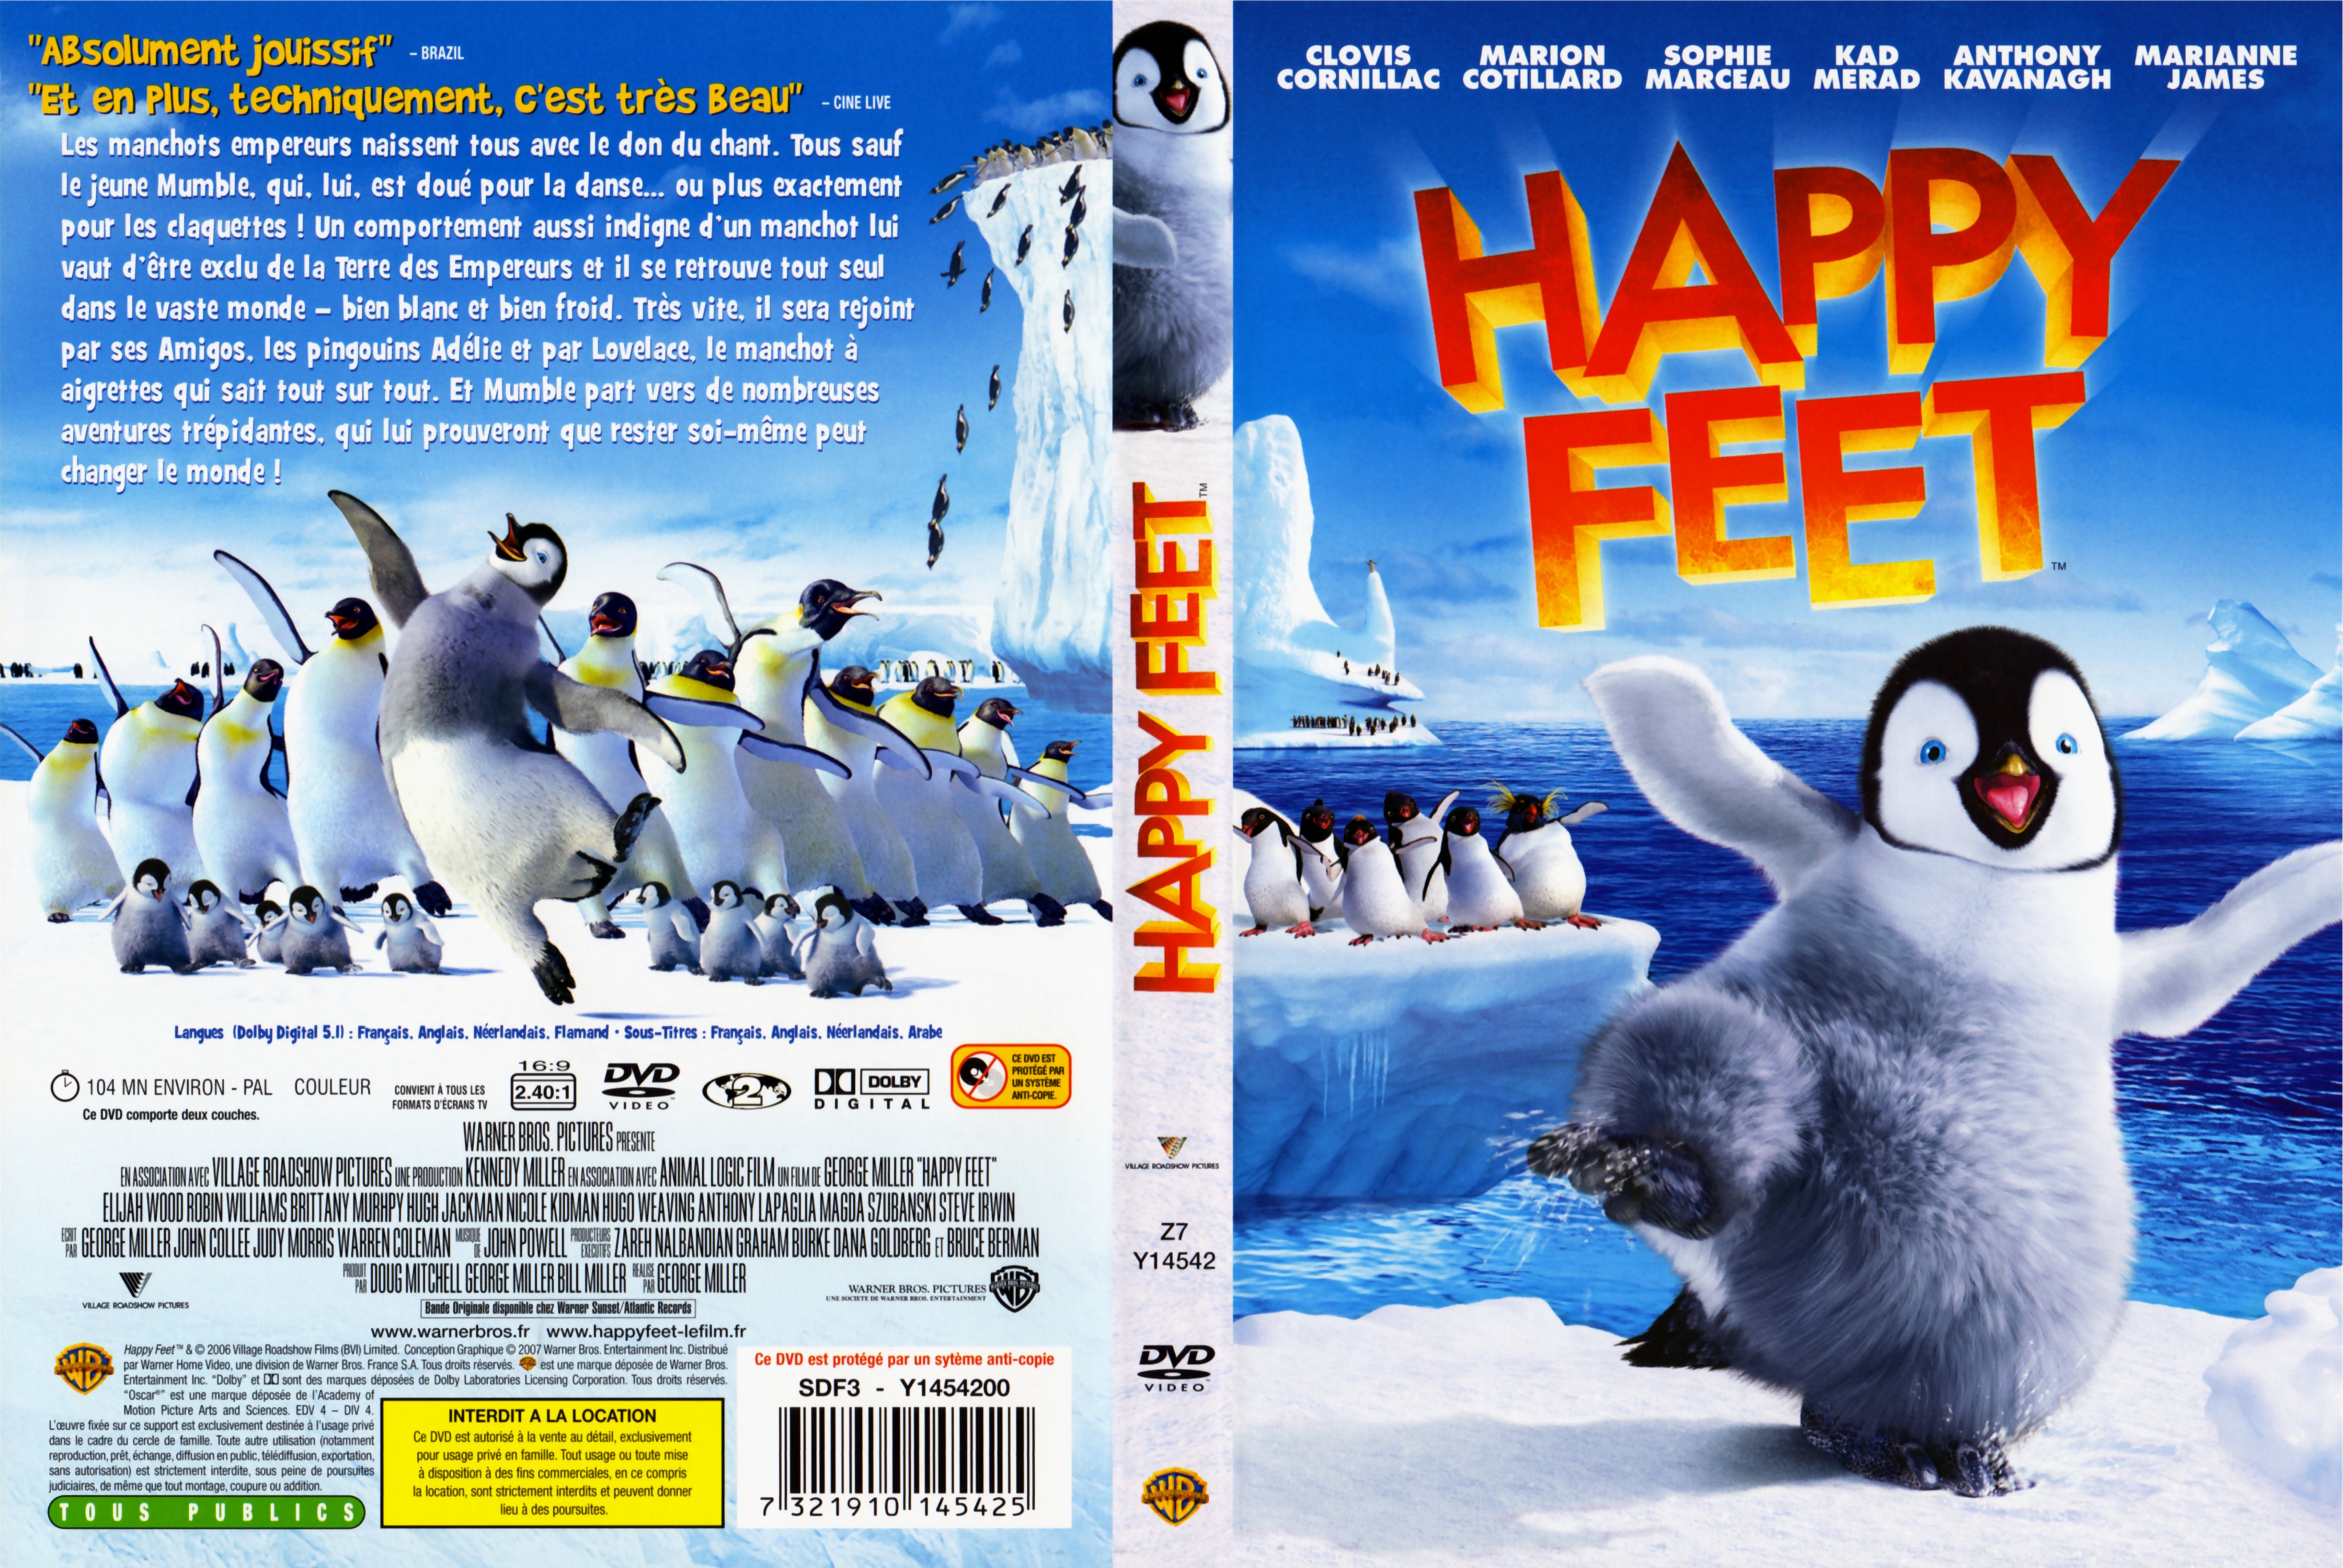 Jaquette DVD Happy feet